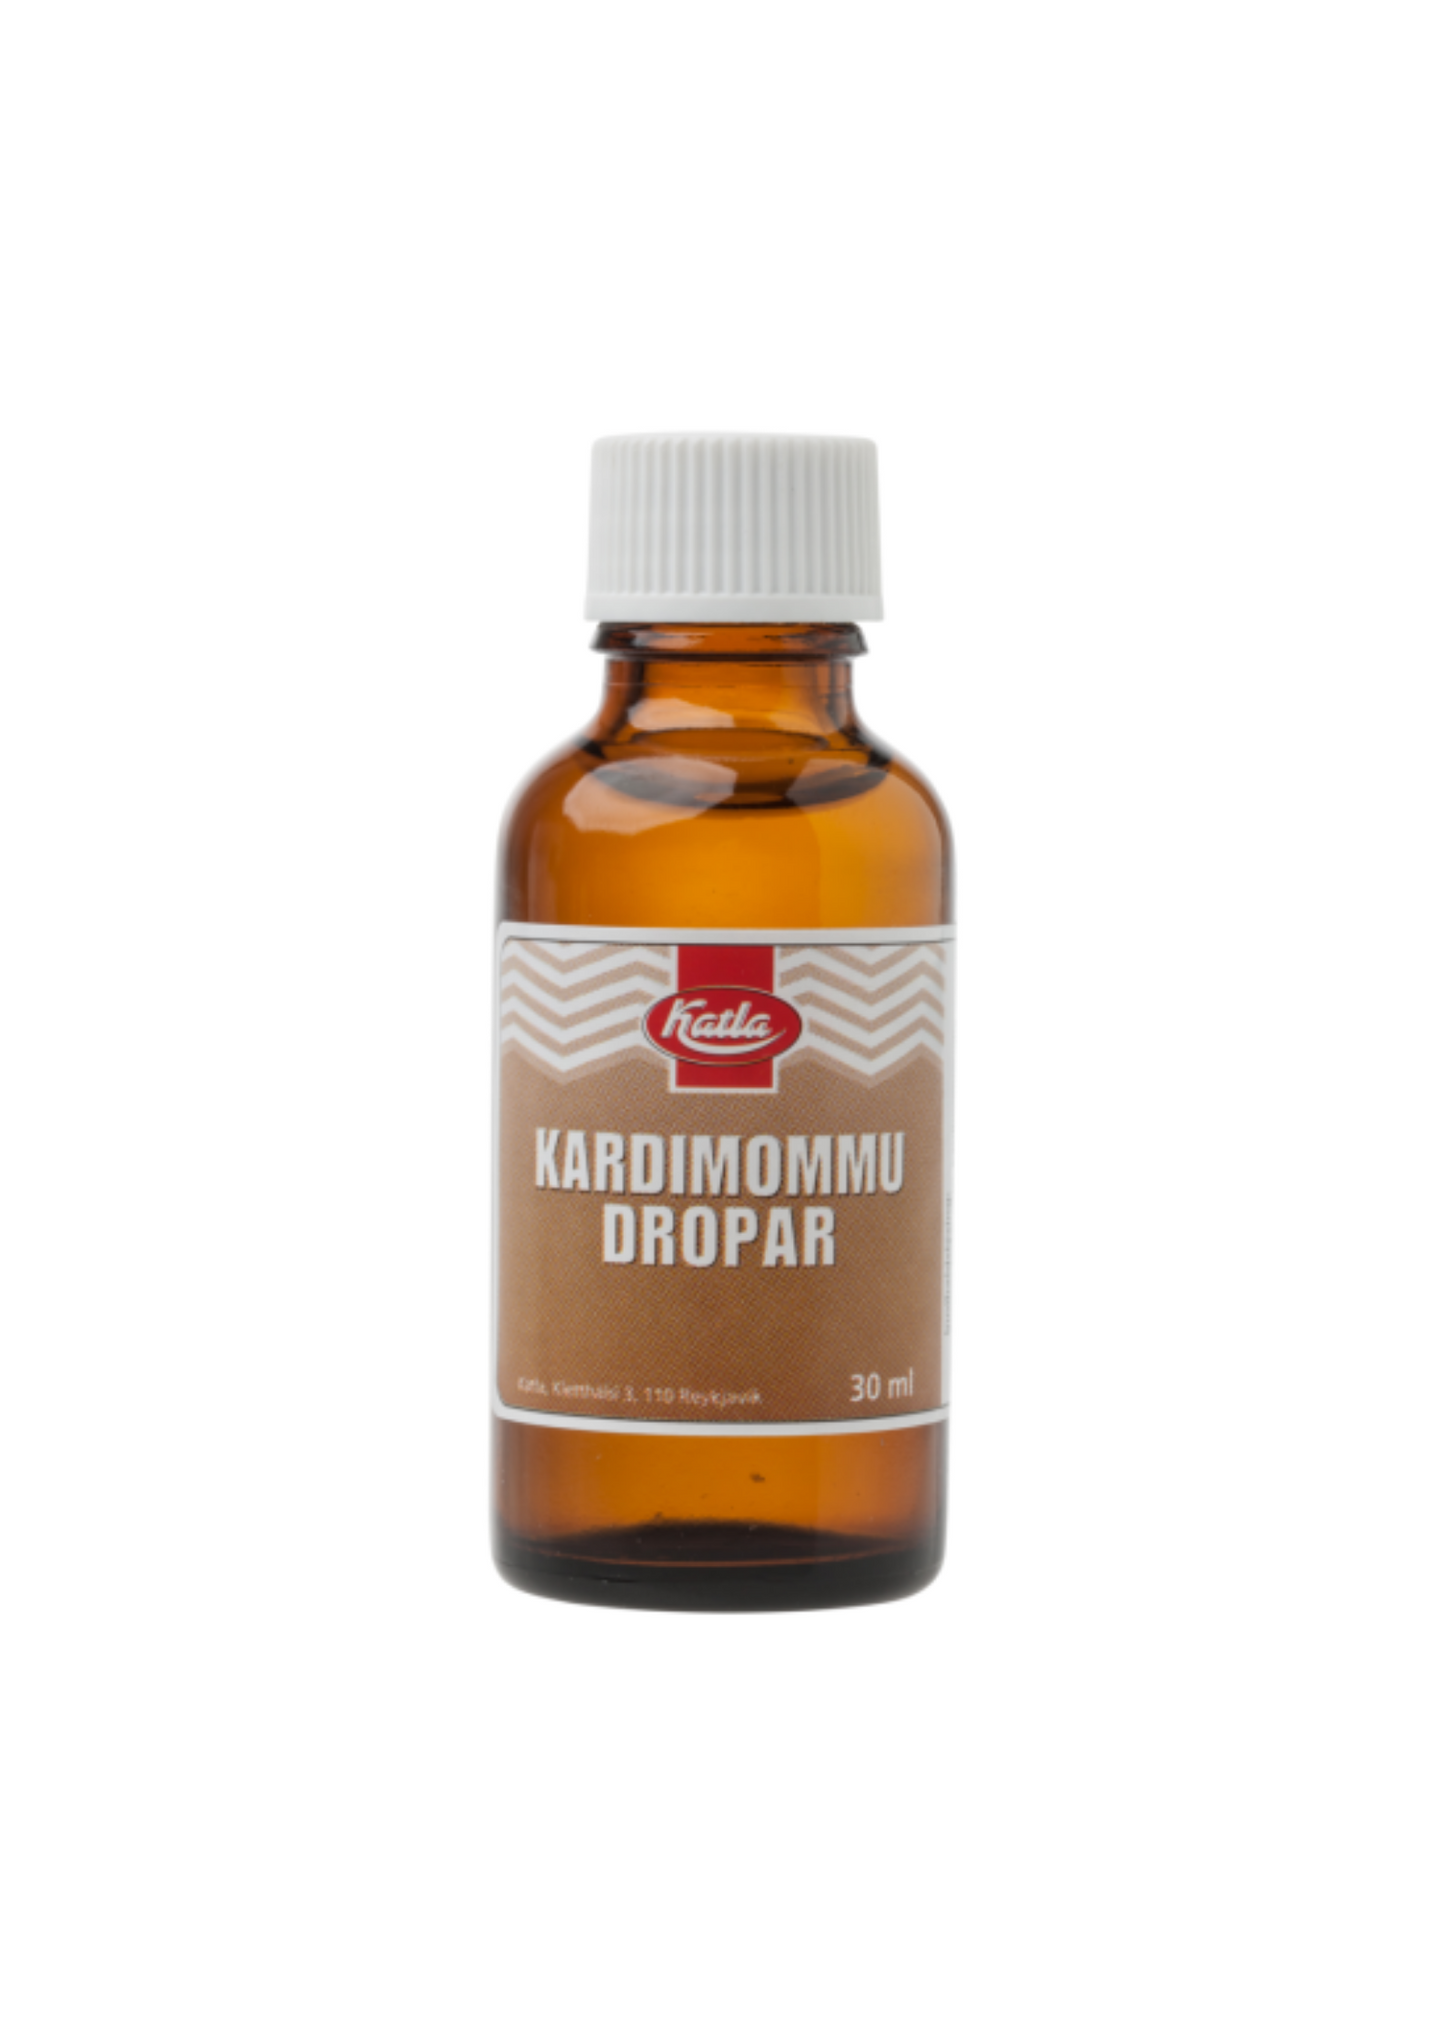 Kardimommudropar - Cardamom Drops (30ml)